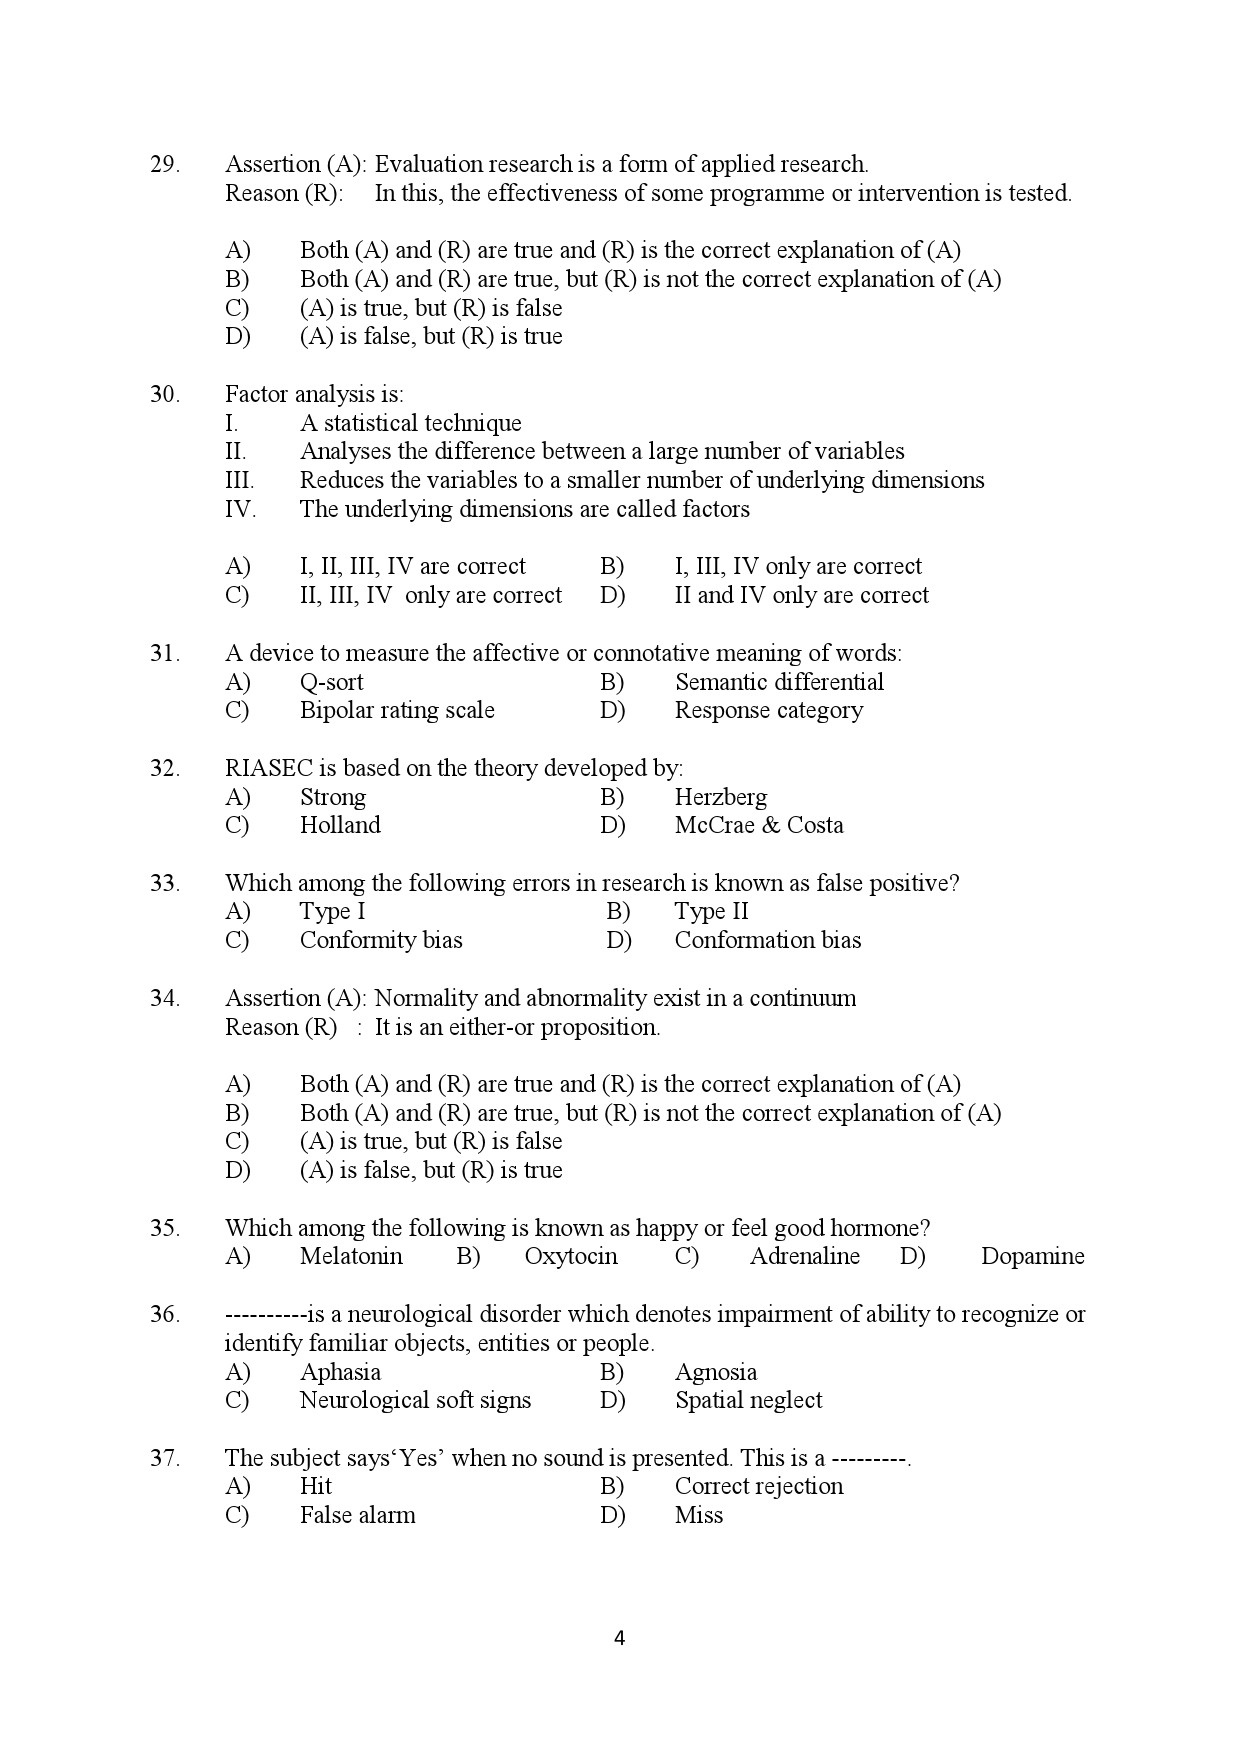 Kerala SET Psychology Exam Question Paper February 2020 4